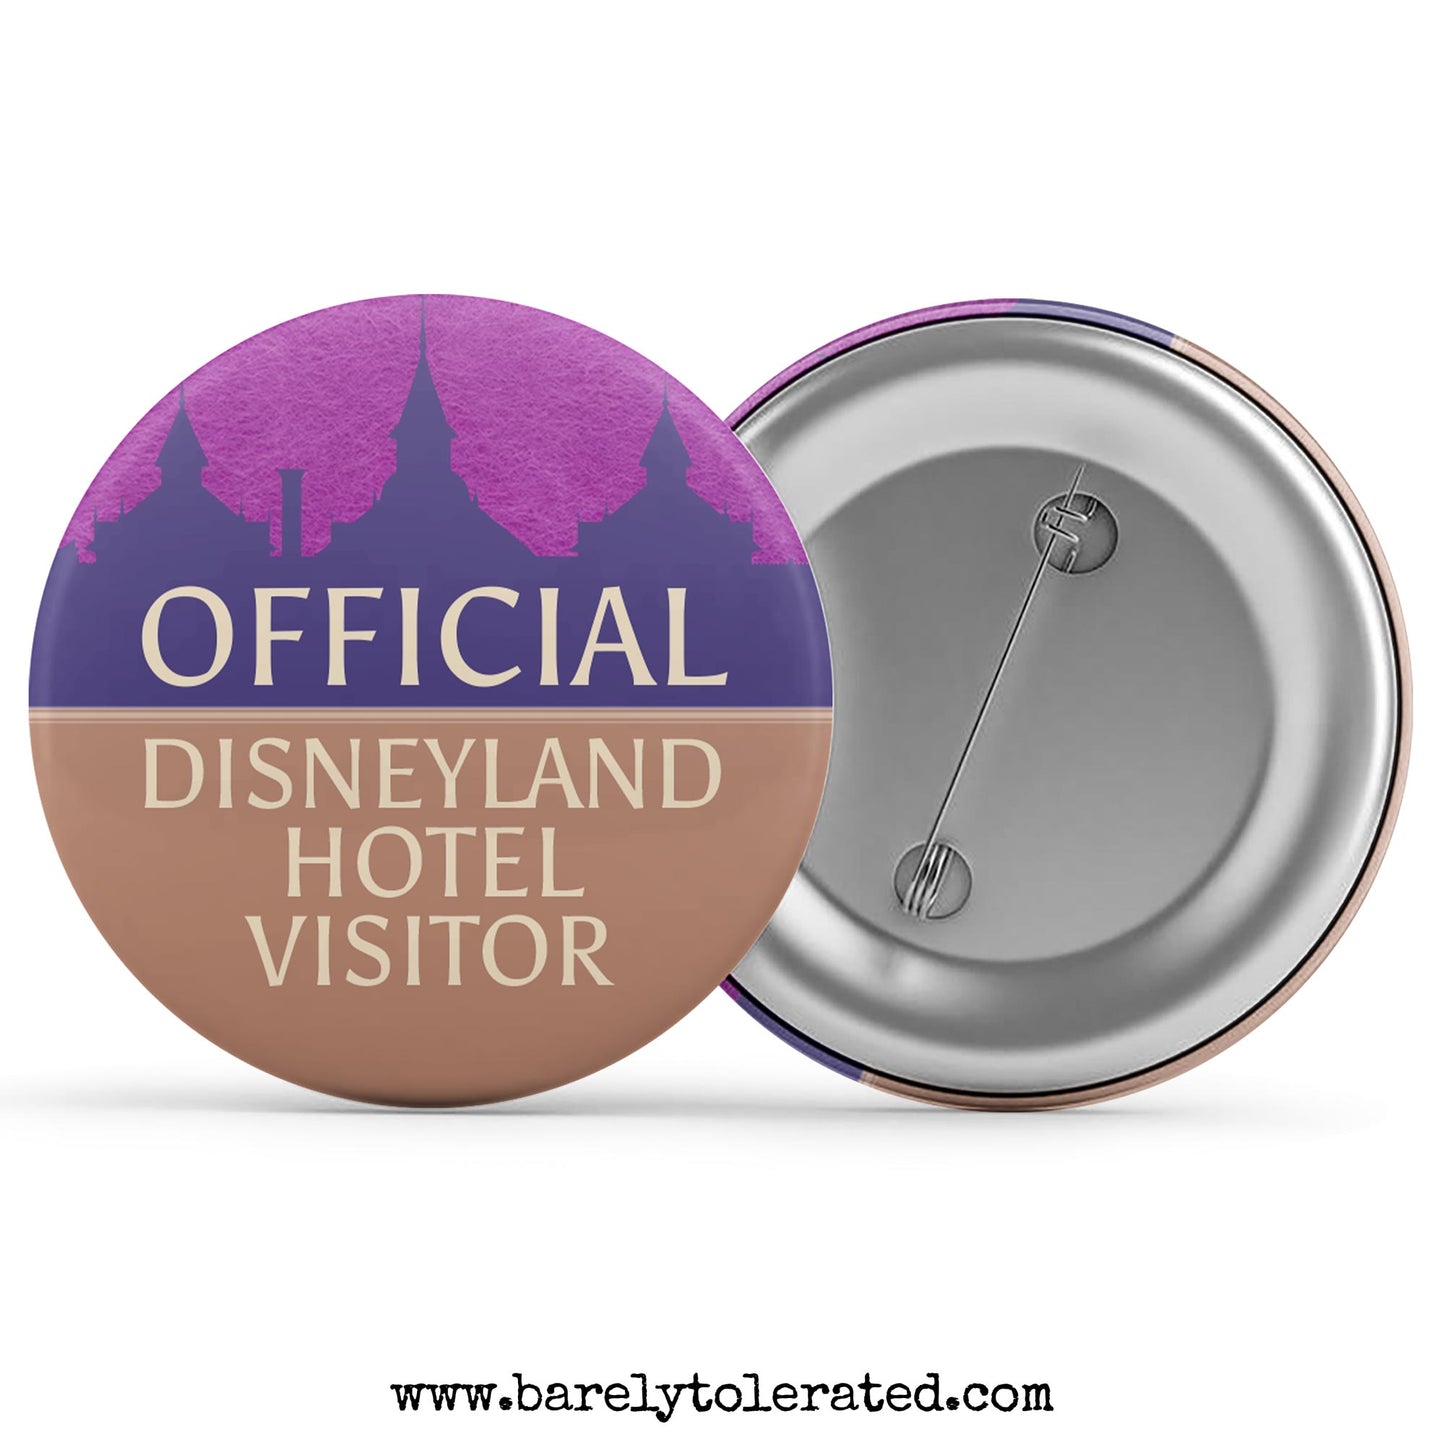 Official Disneyland Hotel Visitor